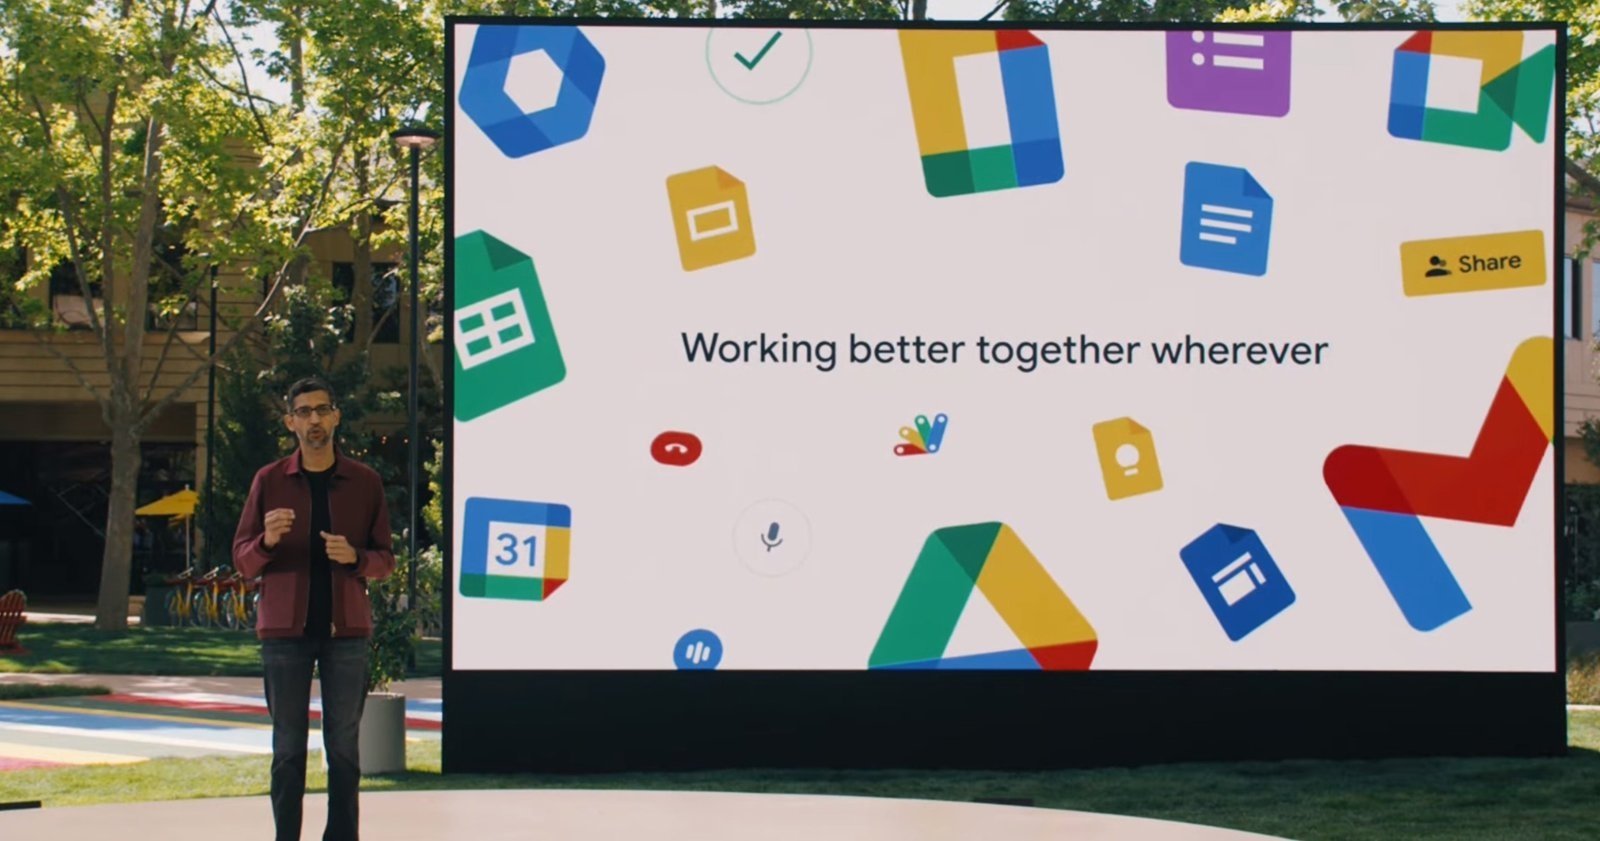 Google Smart Canvas